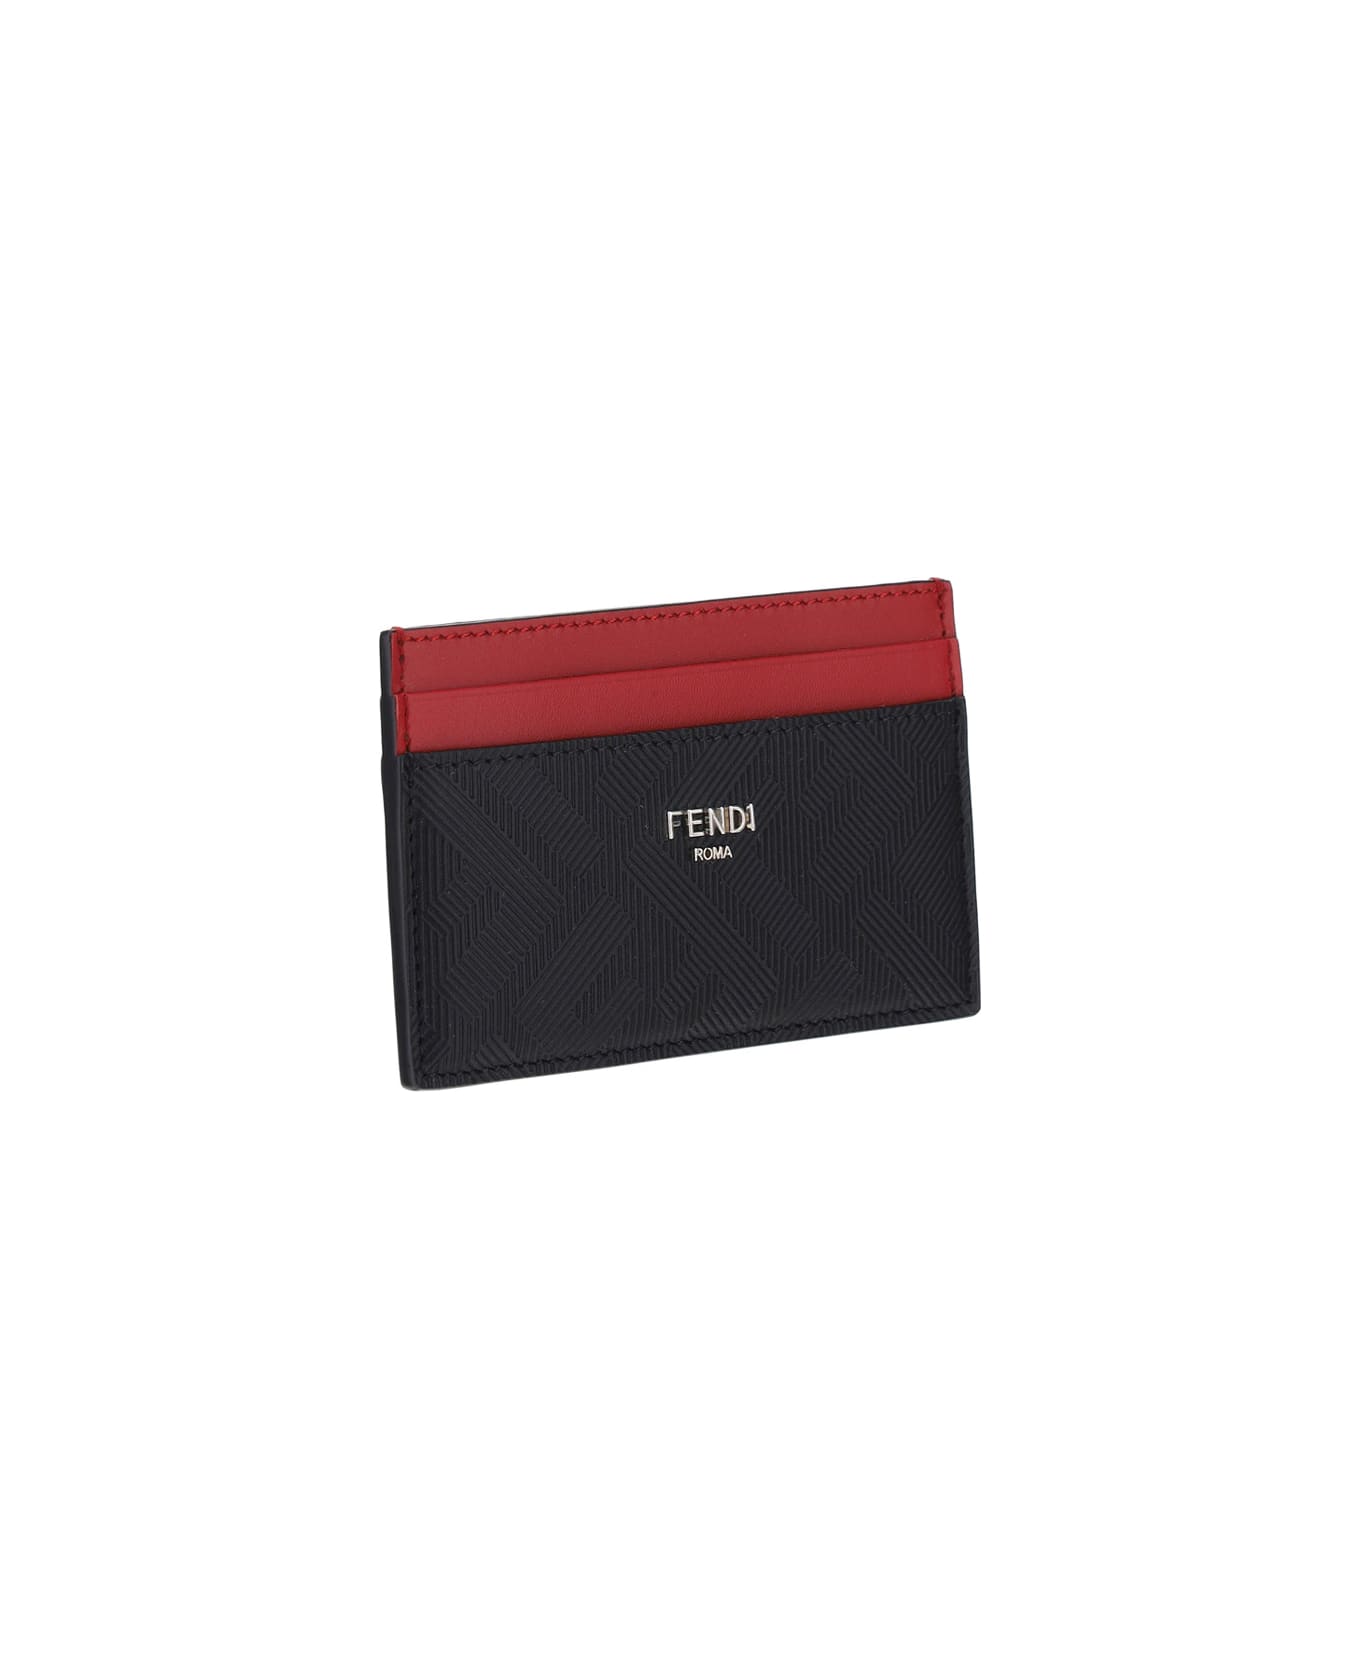 Fendi Card Case - Nero fragola